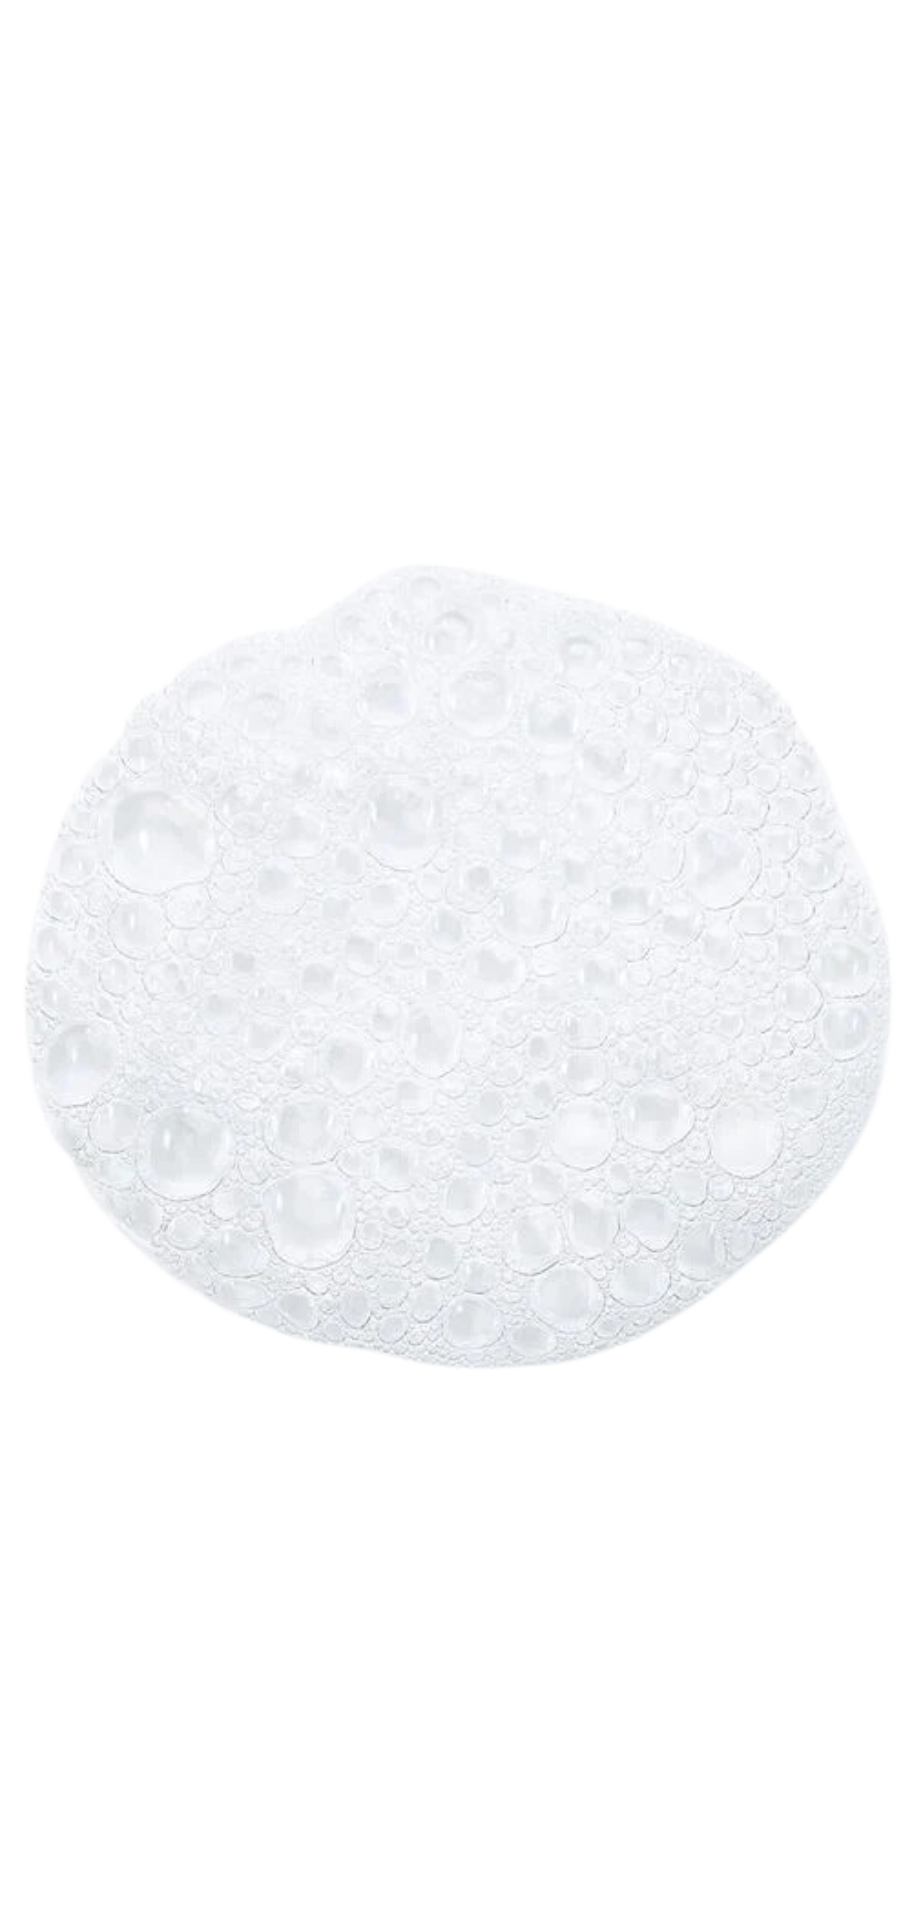 CeraVe Hydrating Cream To Foam Cleanser – 237ml